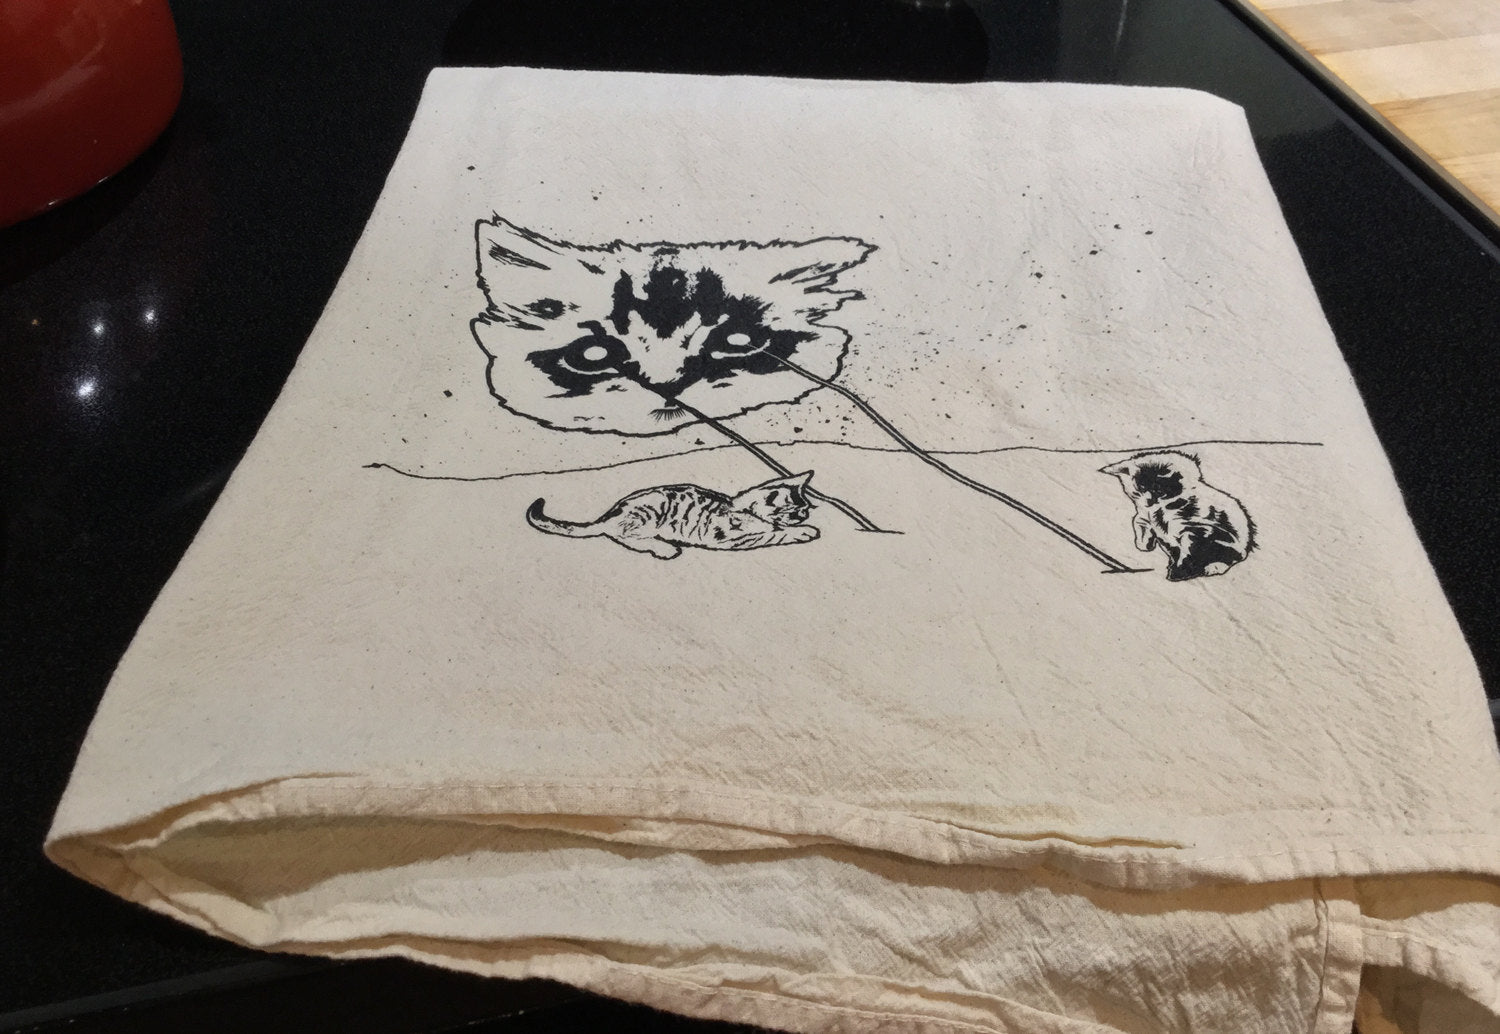 Kitchen Towel: Meta Laser Cat